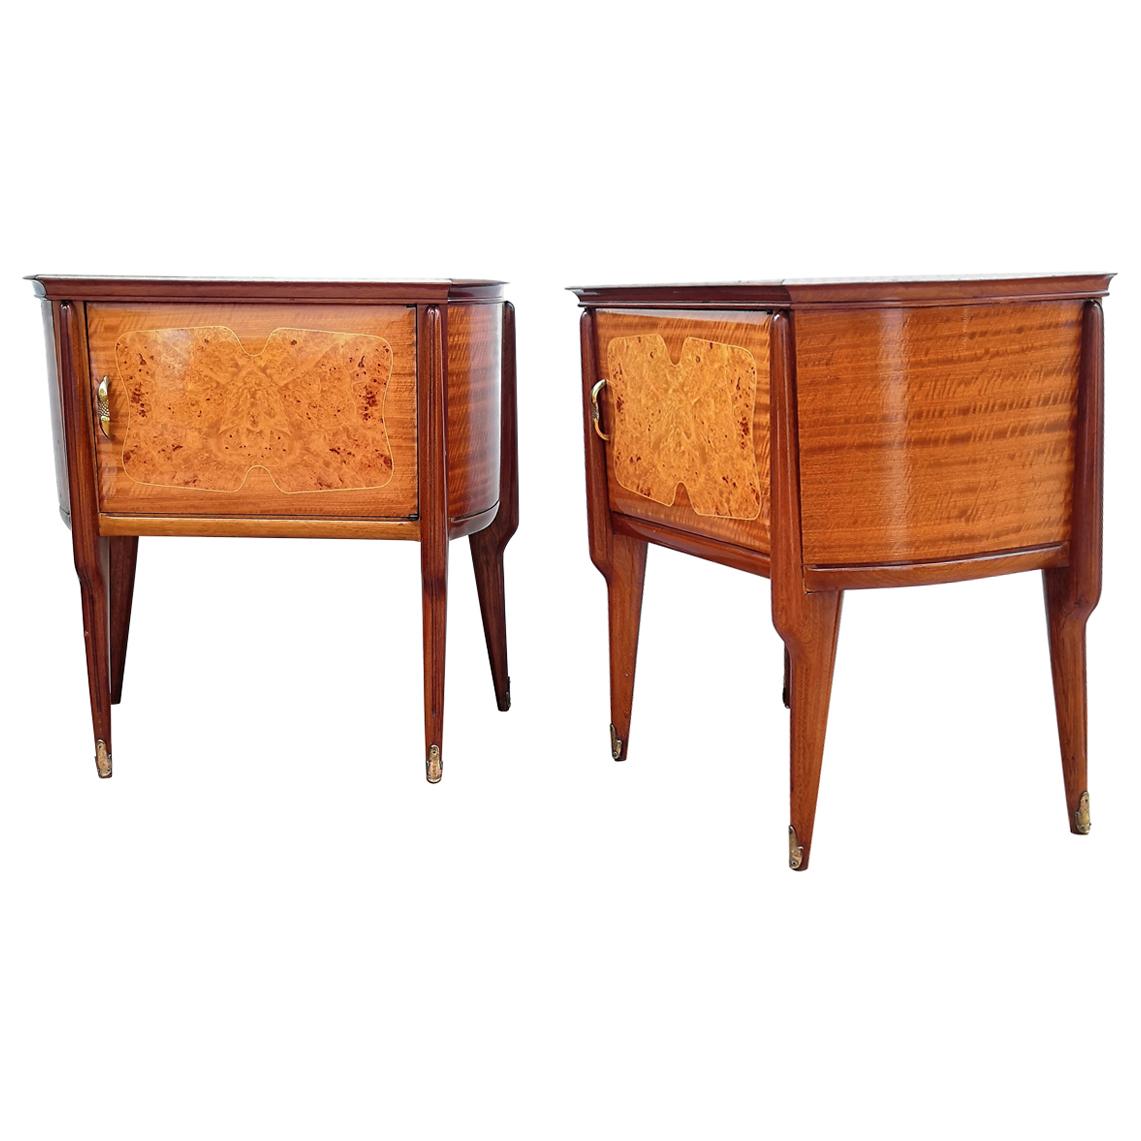 Pair of Midcentury Italian Art Deco Wood & Glass Nightstands Bedside Tables